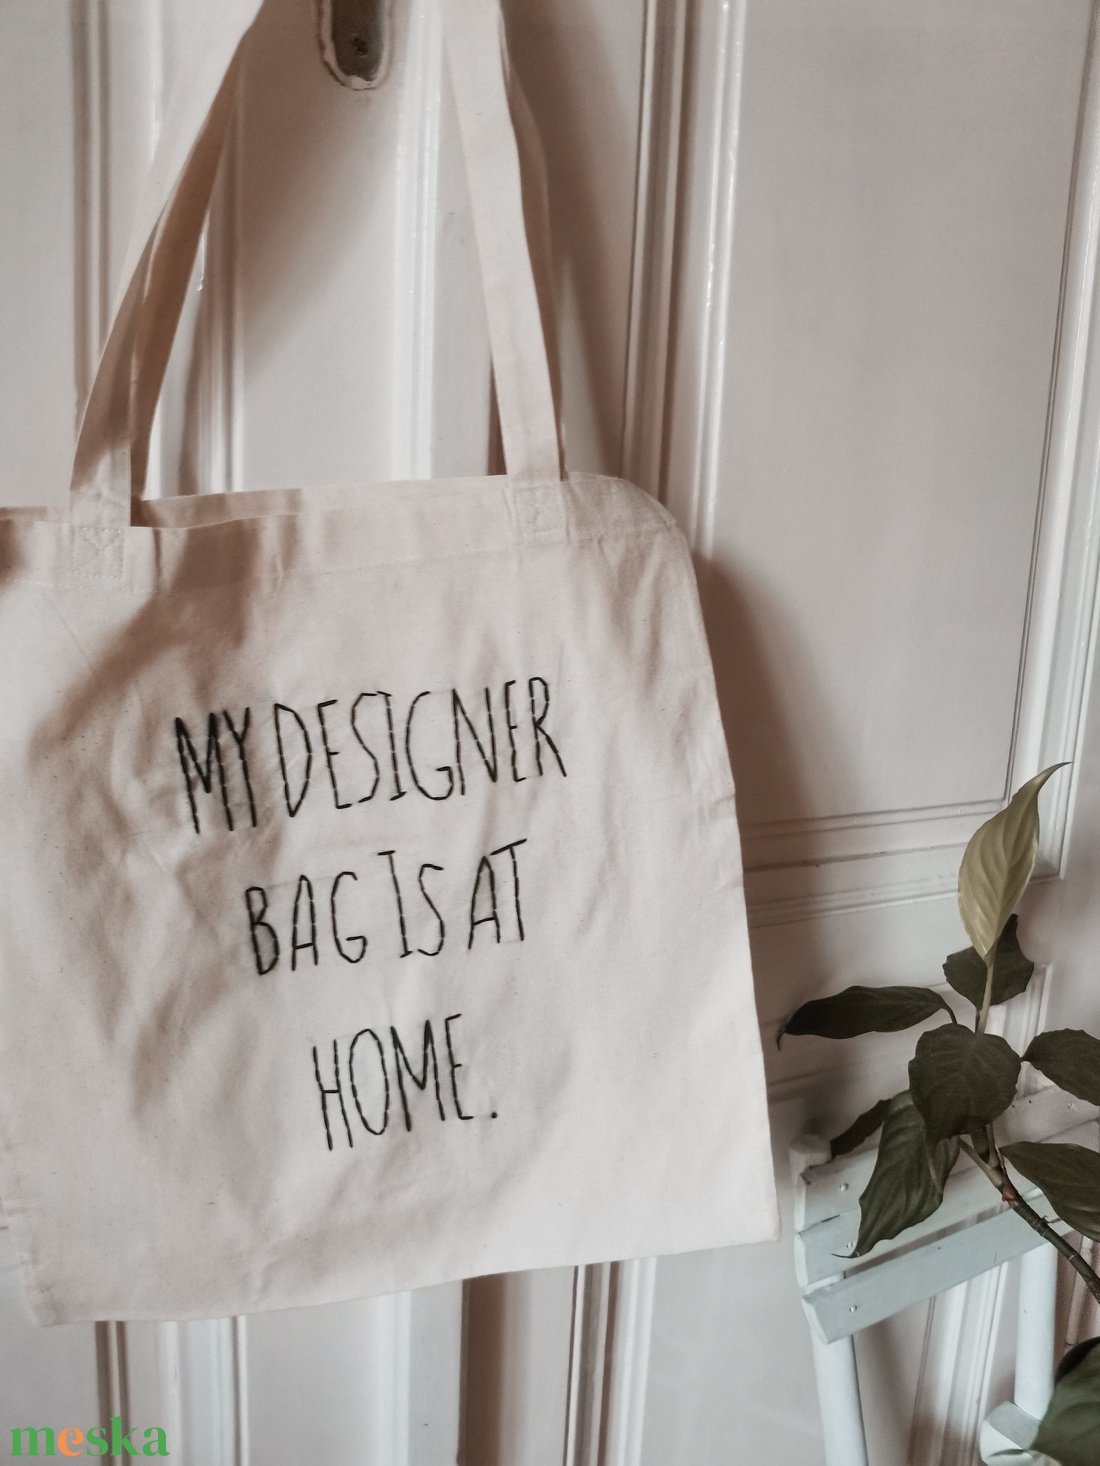 My designer bag is at home - táska & tok - kézitáska & válltáska - válltáska - Meska.hu